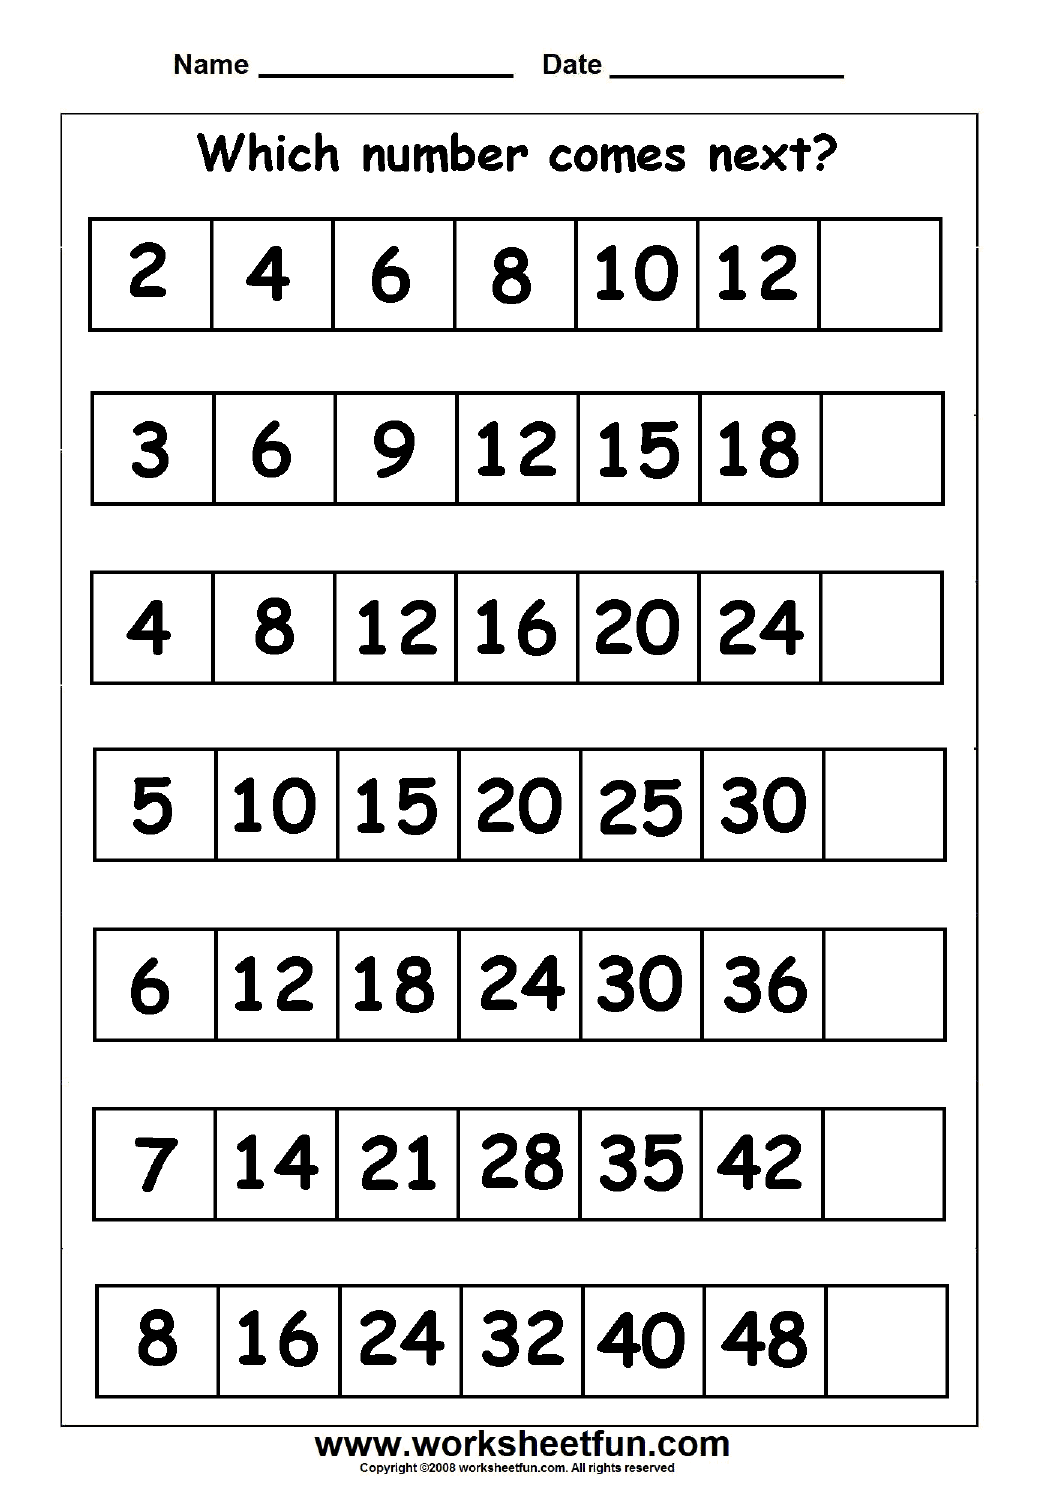 16 Best Images Of Second Grade Number Patterns Worksheets Number Patterns Worksheets 2nd Grade